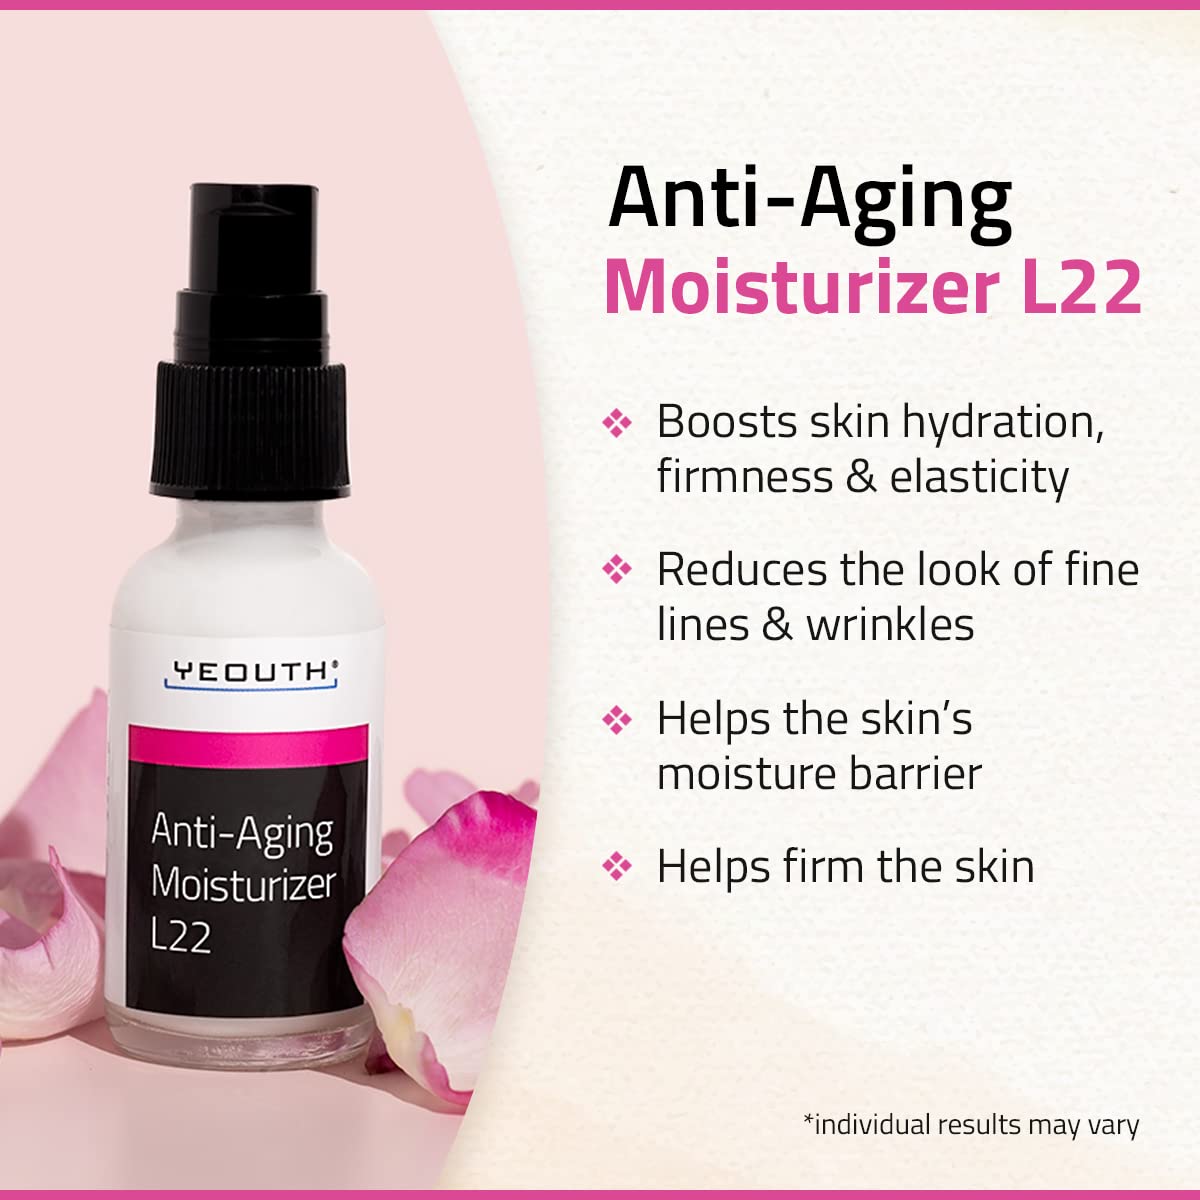 Anti-Aging Moisturizer L22